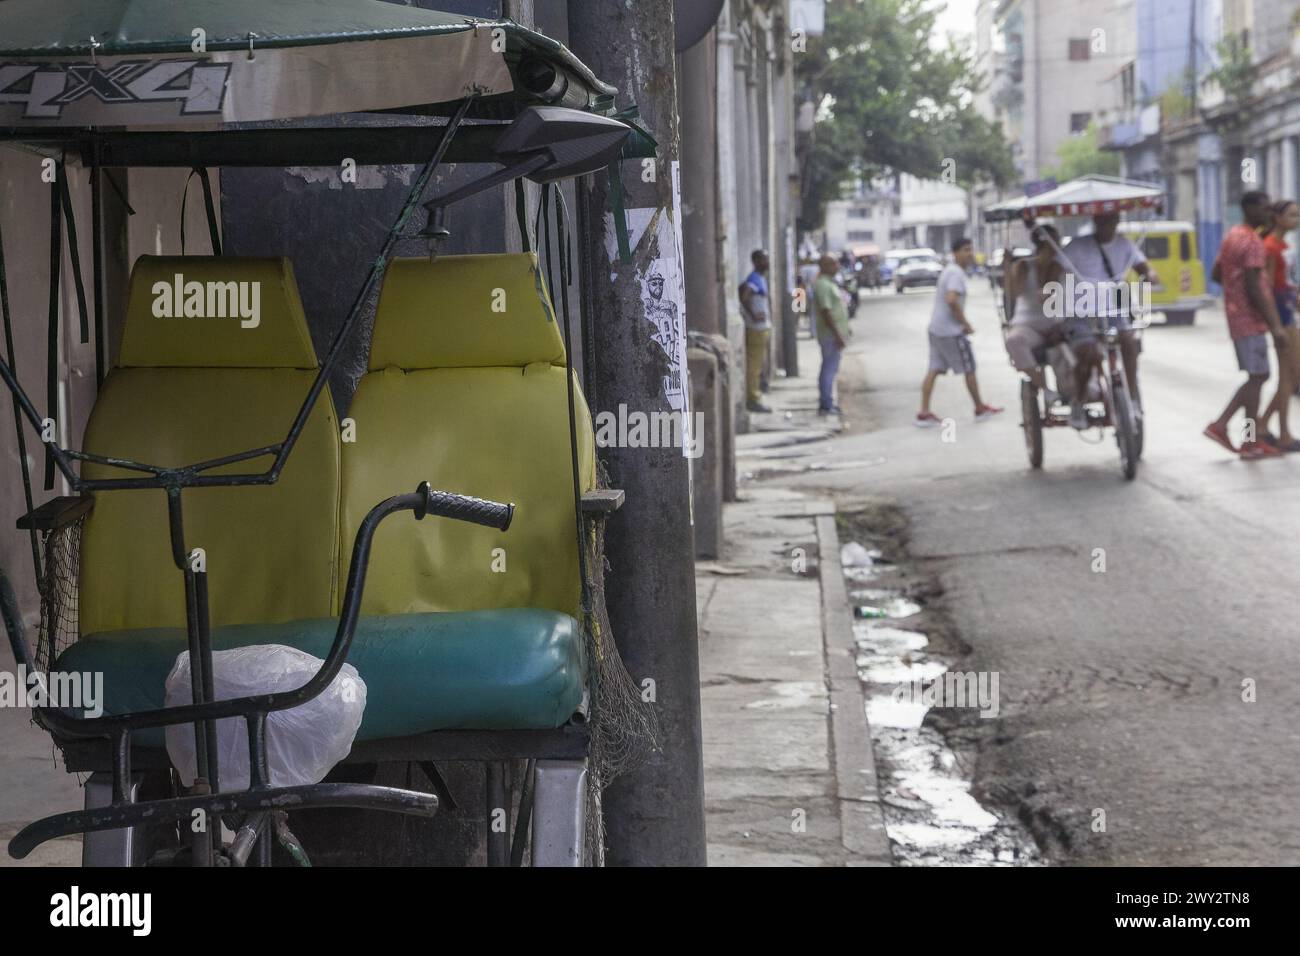 A bicitaxi and people on a city street, Havana, Cuba Stock Photo